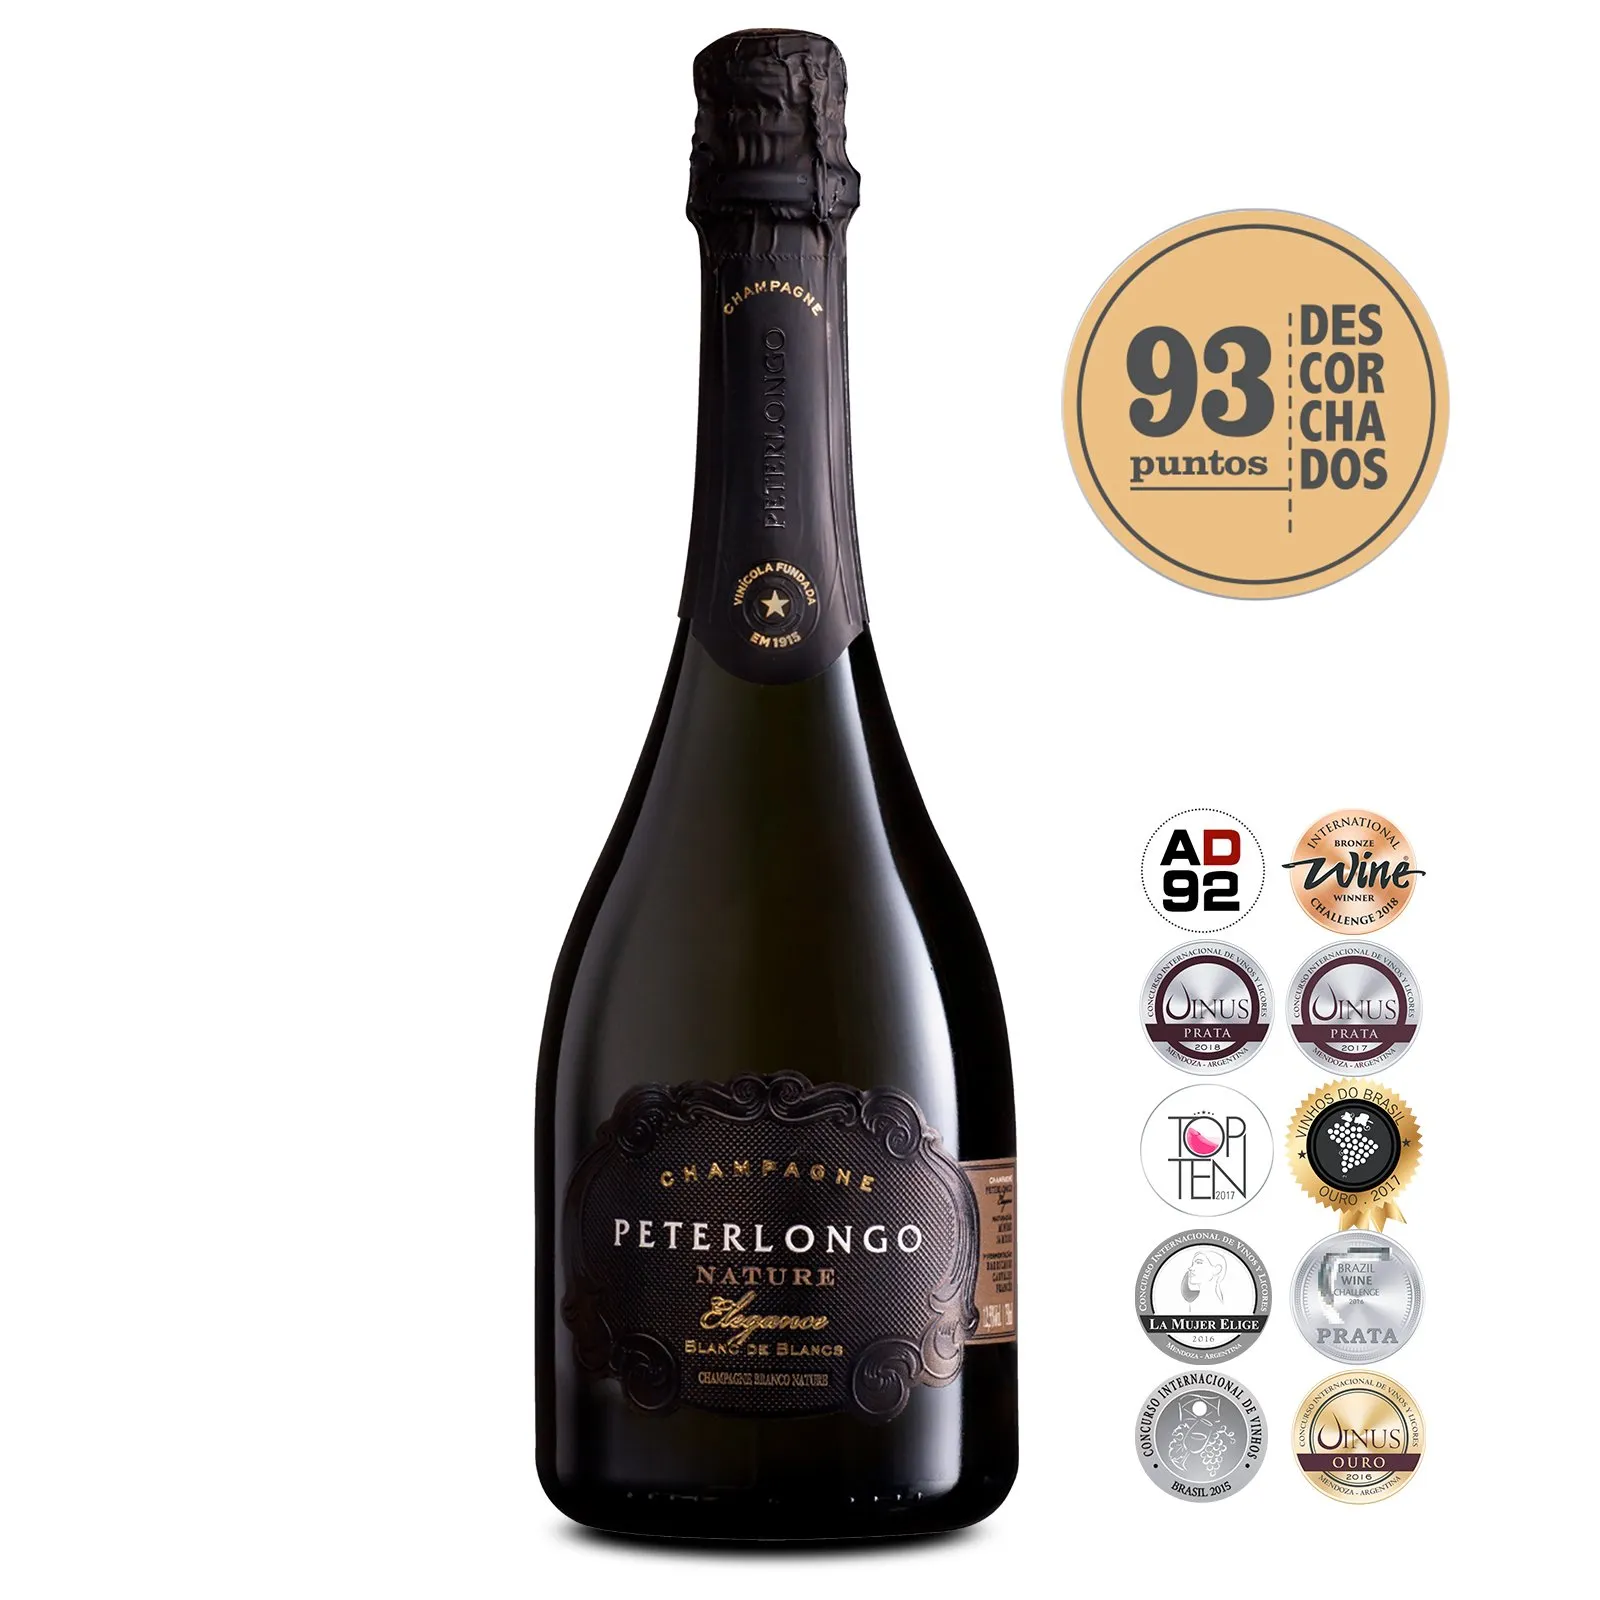 Peterlongo Champagne Elegance Nature 750ml